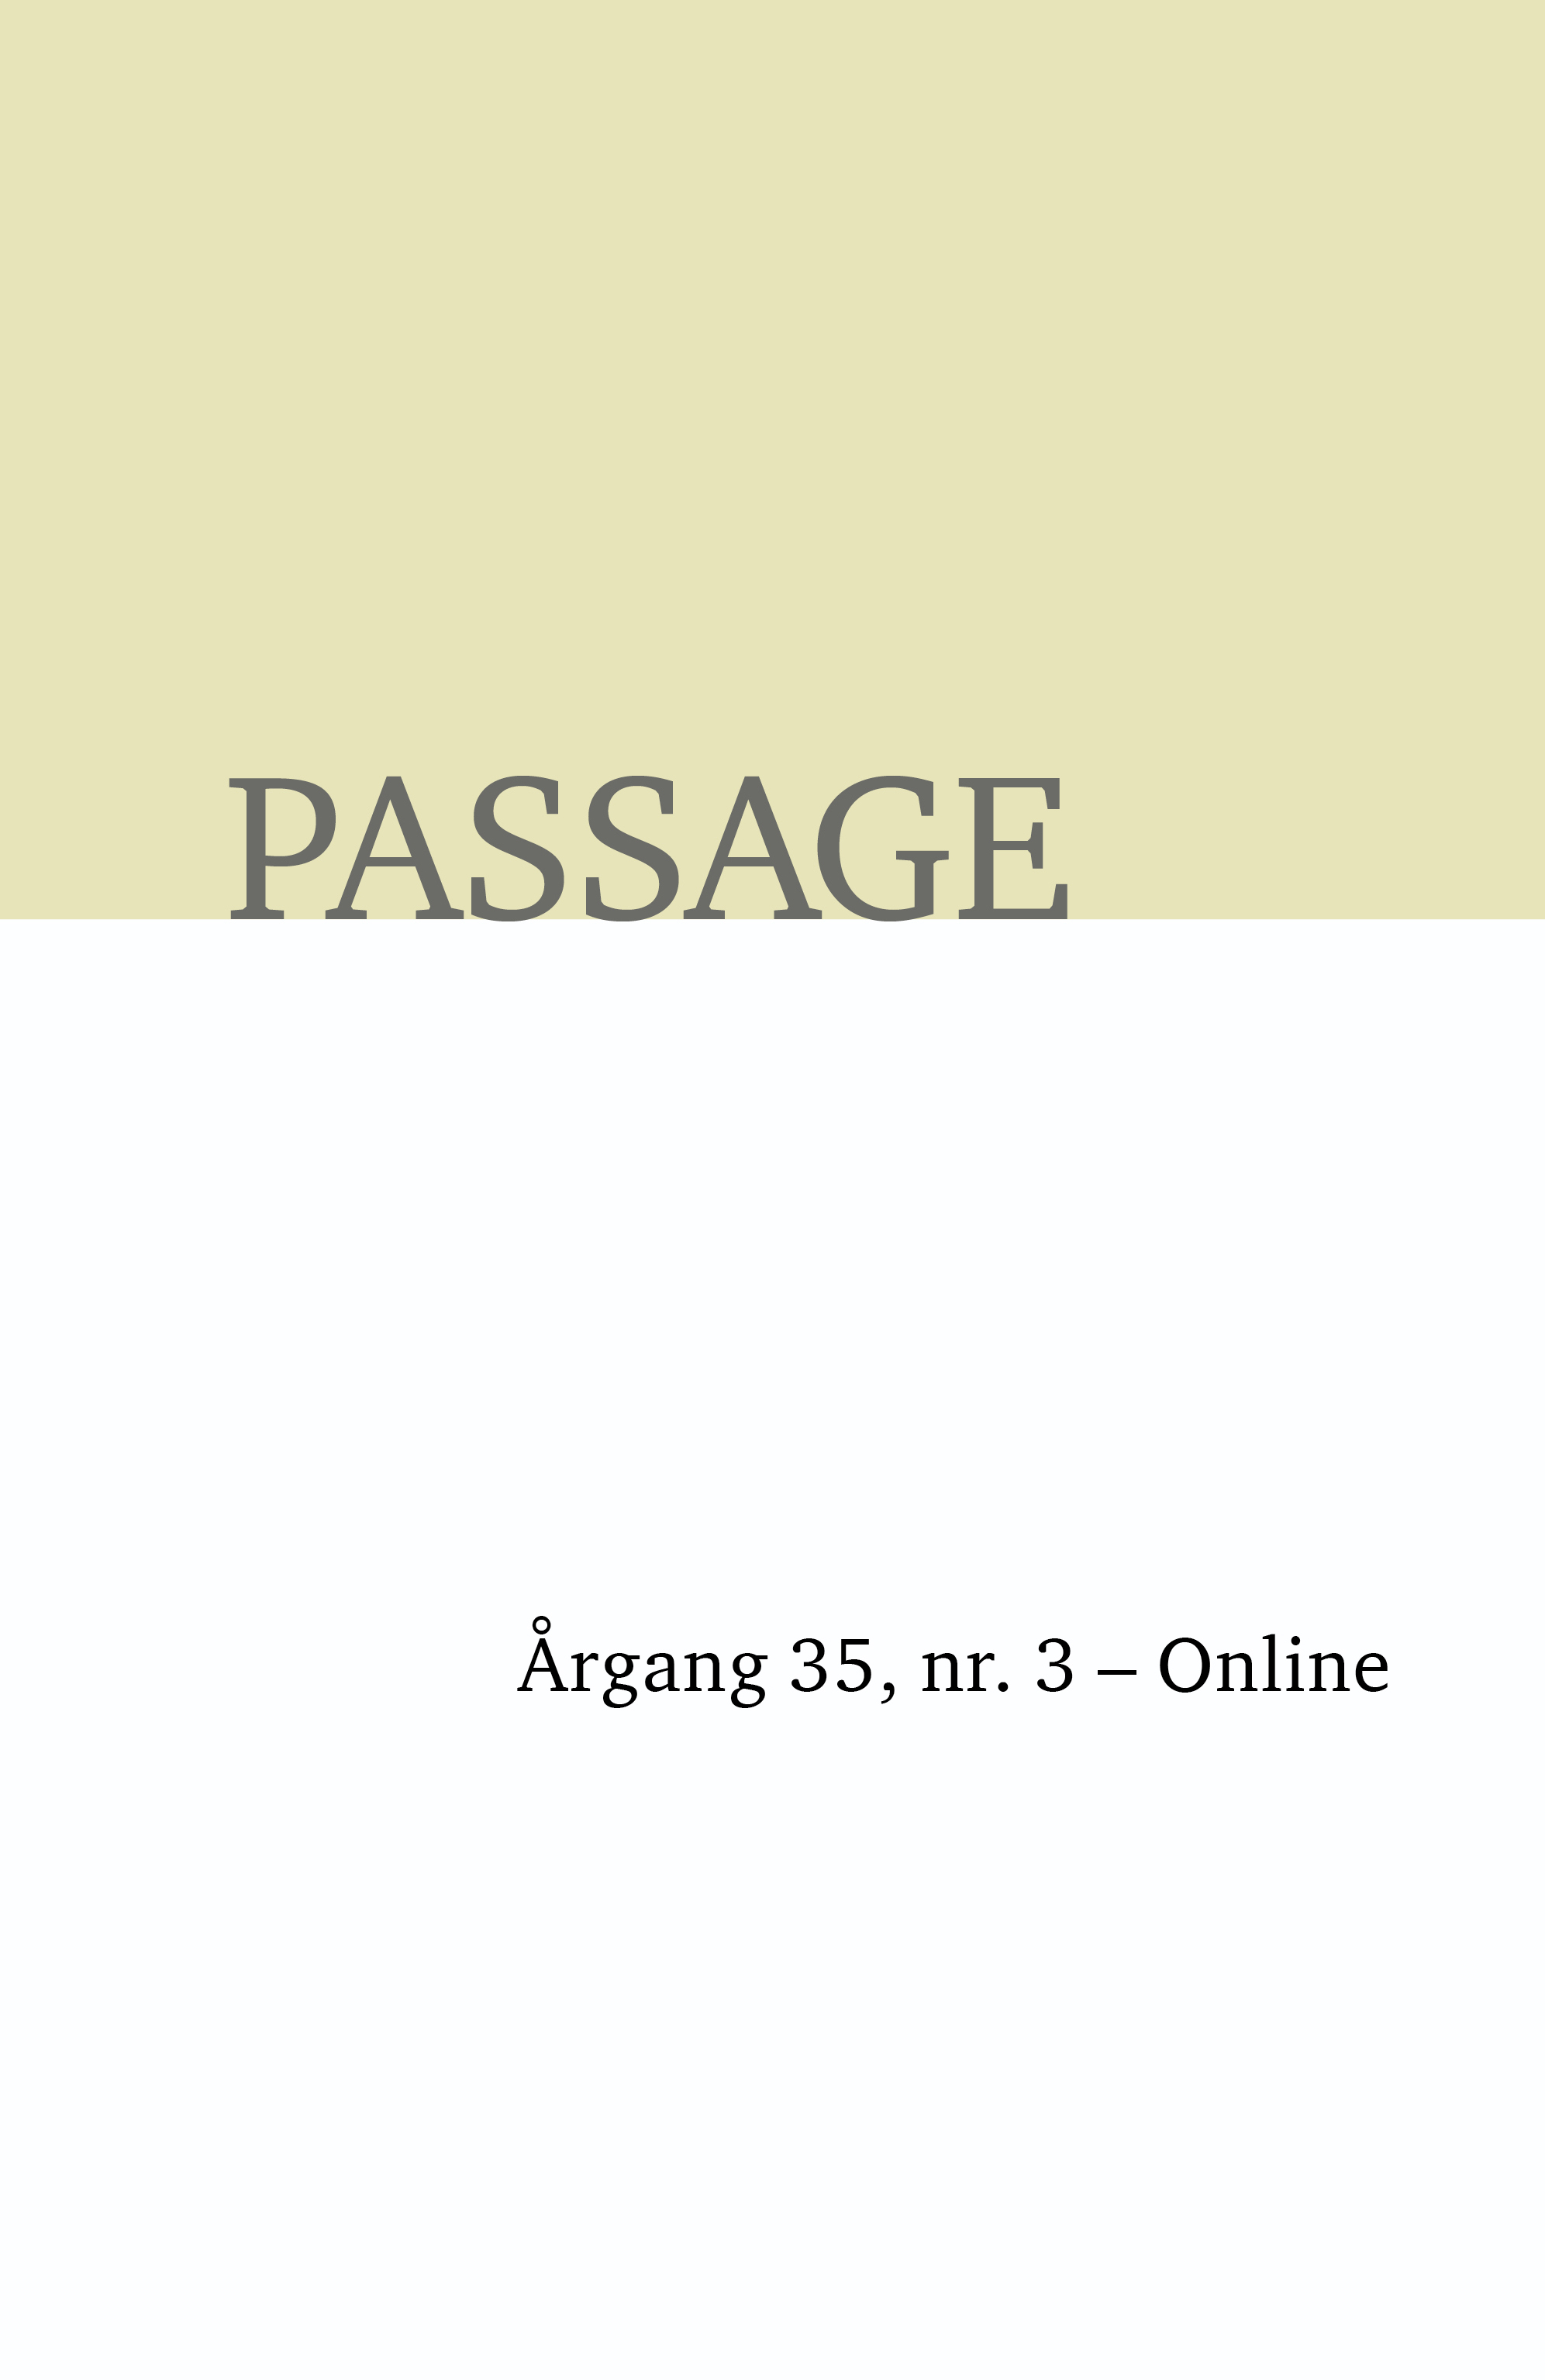 					Se Årg. 35 Nr. 3 (2020): Passage - Online
				